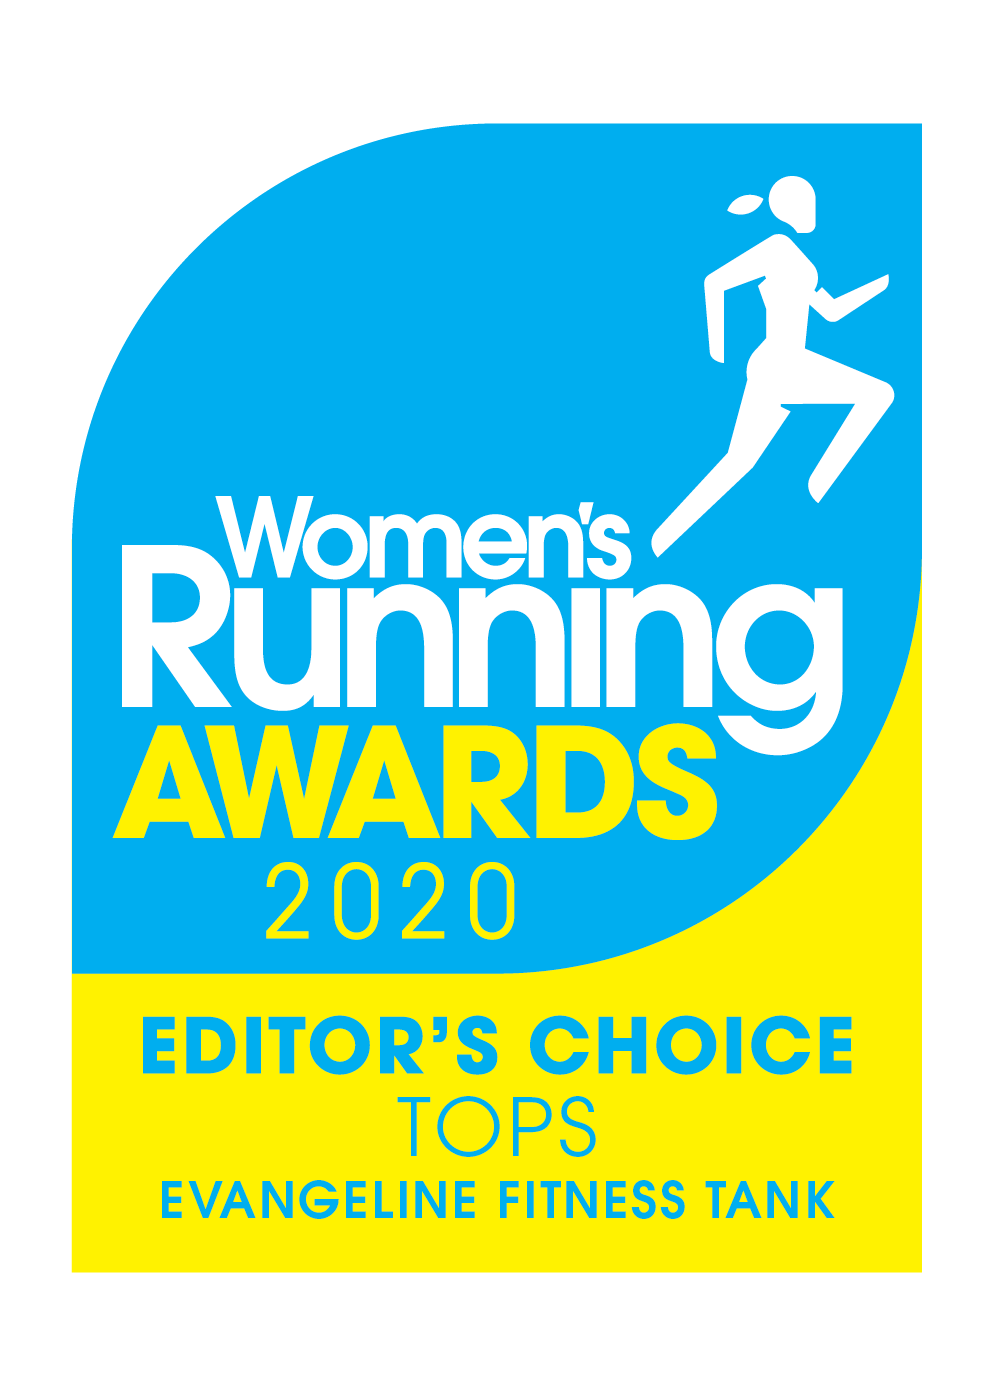 Women's Running Awards 2020 - Editor's Choice Tops - Evangeline Fitness Tank